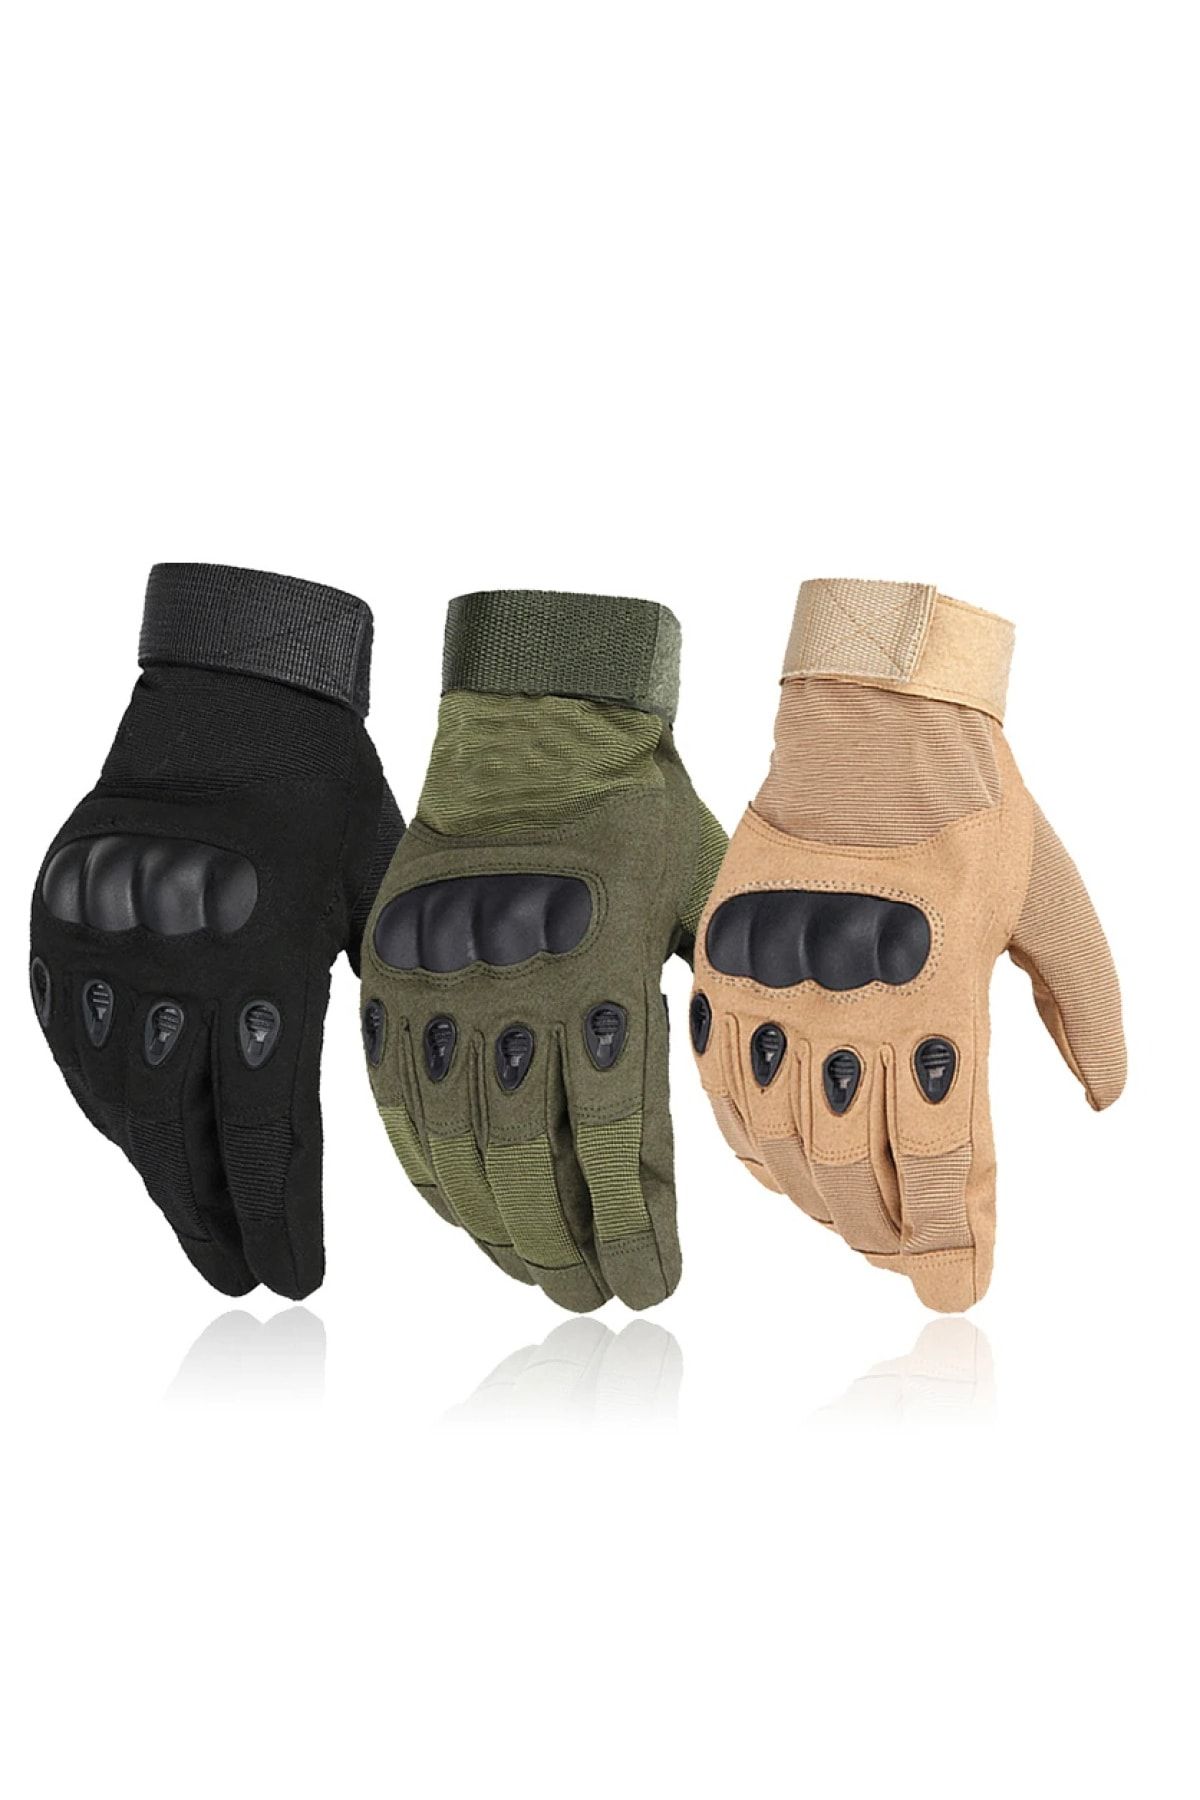 Fingerless Airsoft Gloves